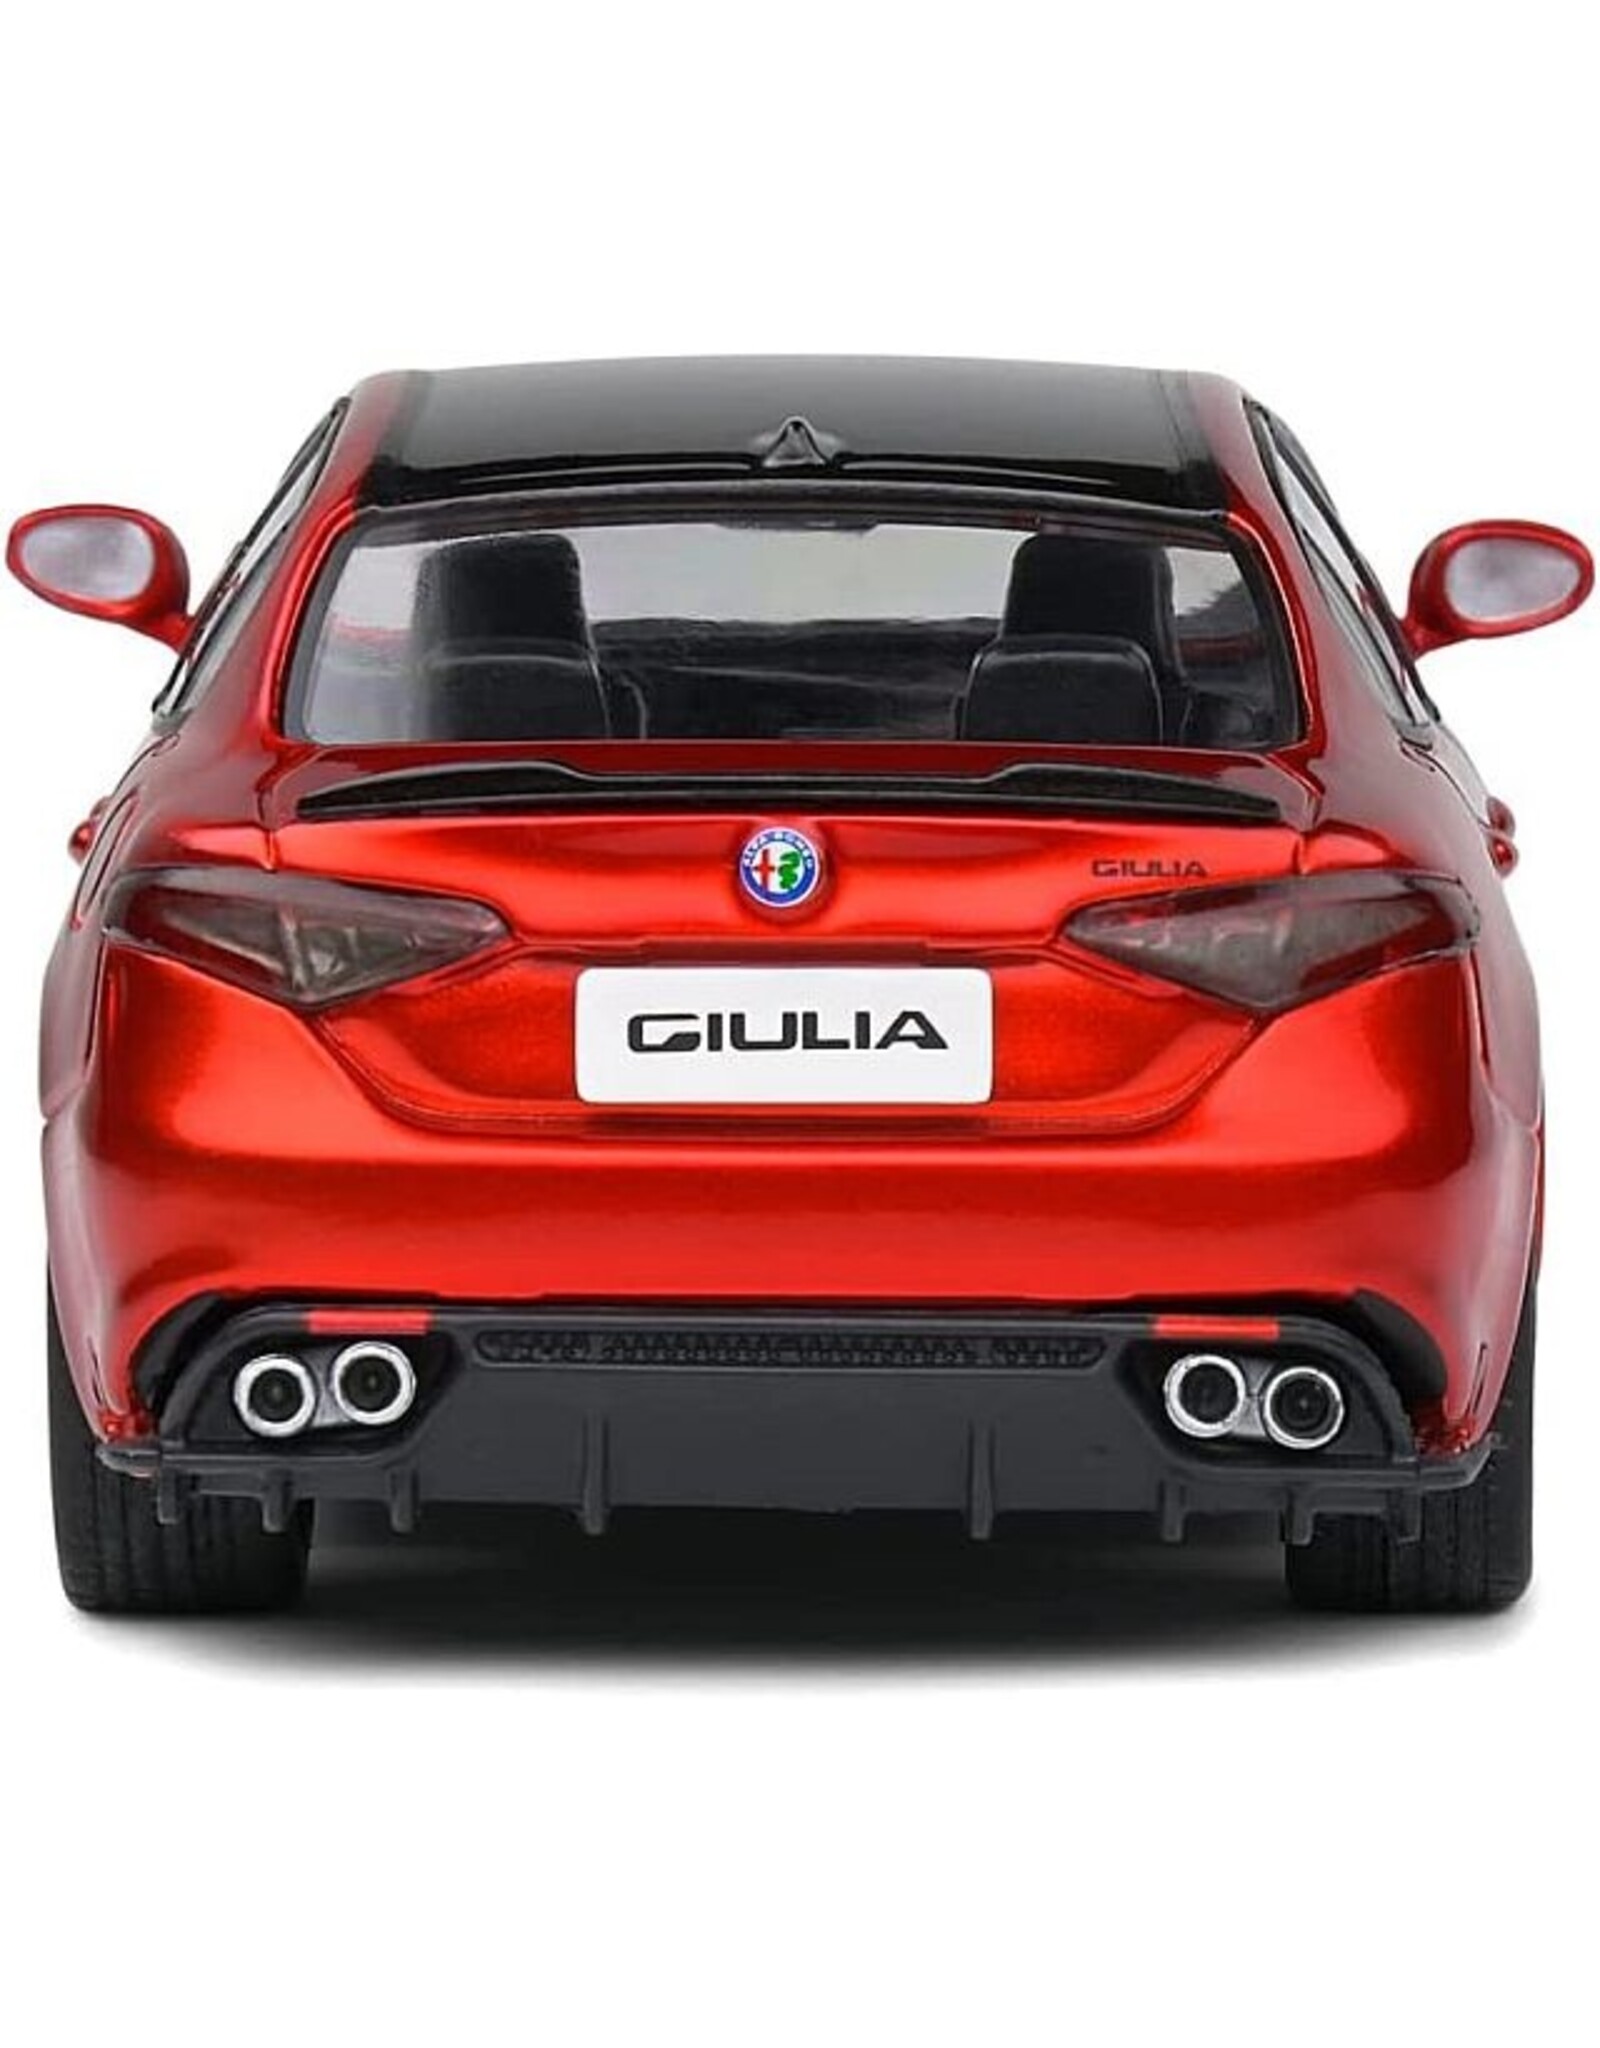 Alfa Romeo Alfa Romeo Giulia Quadrifoglio(2016)red metallic